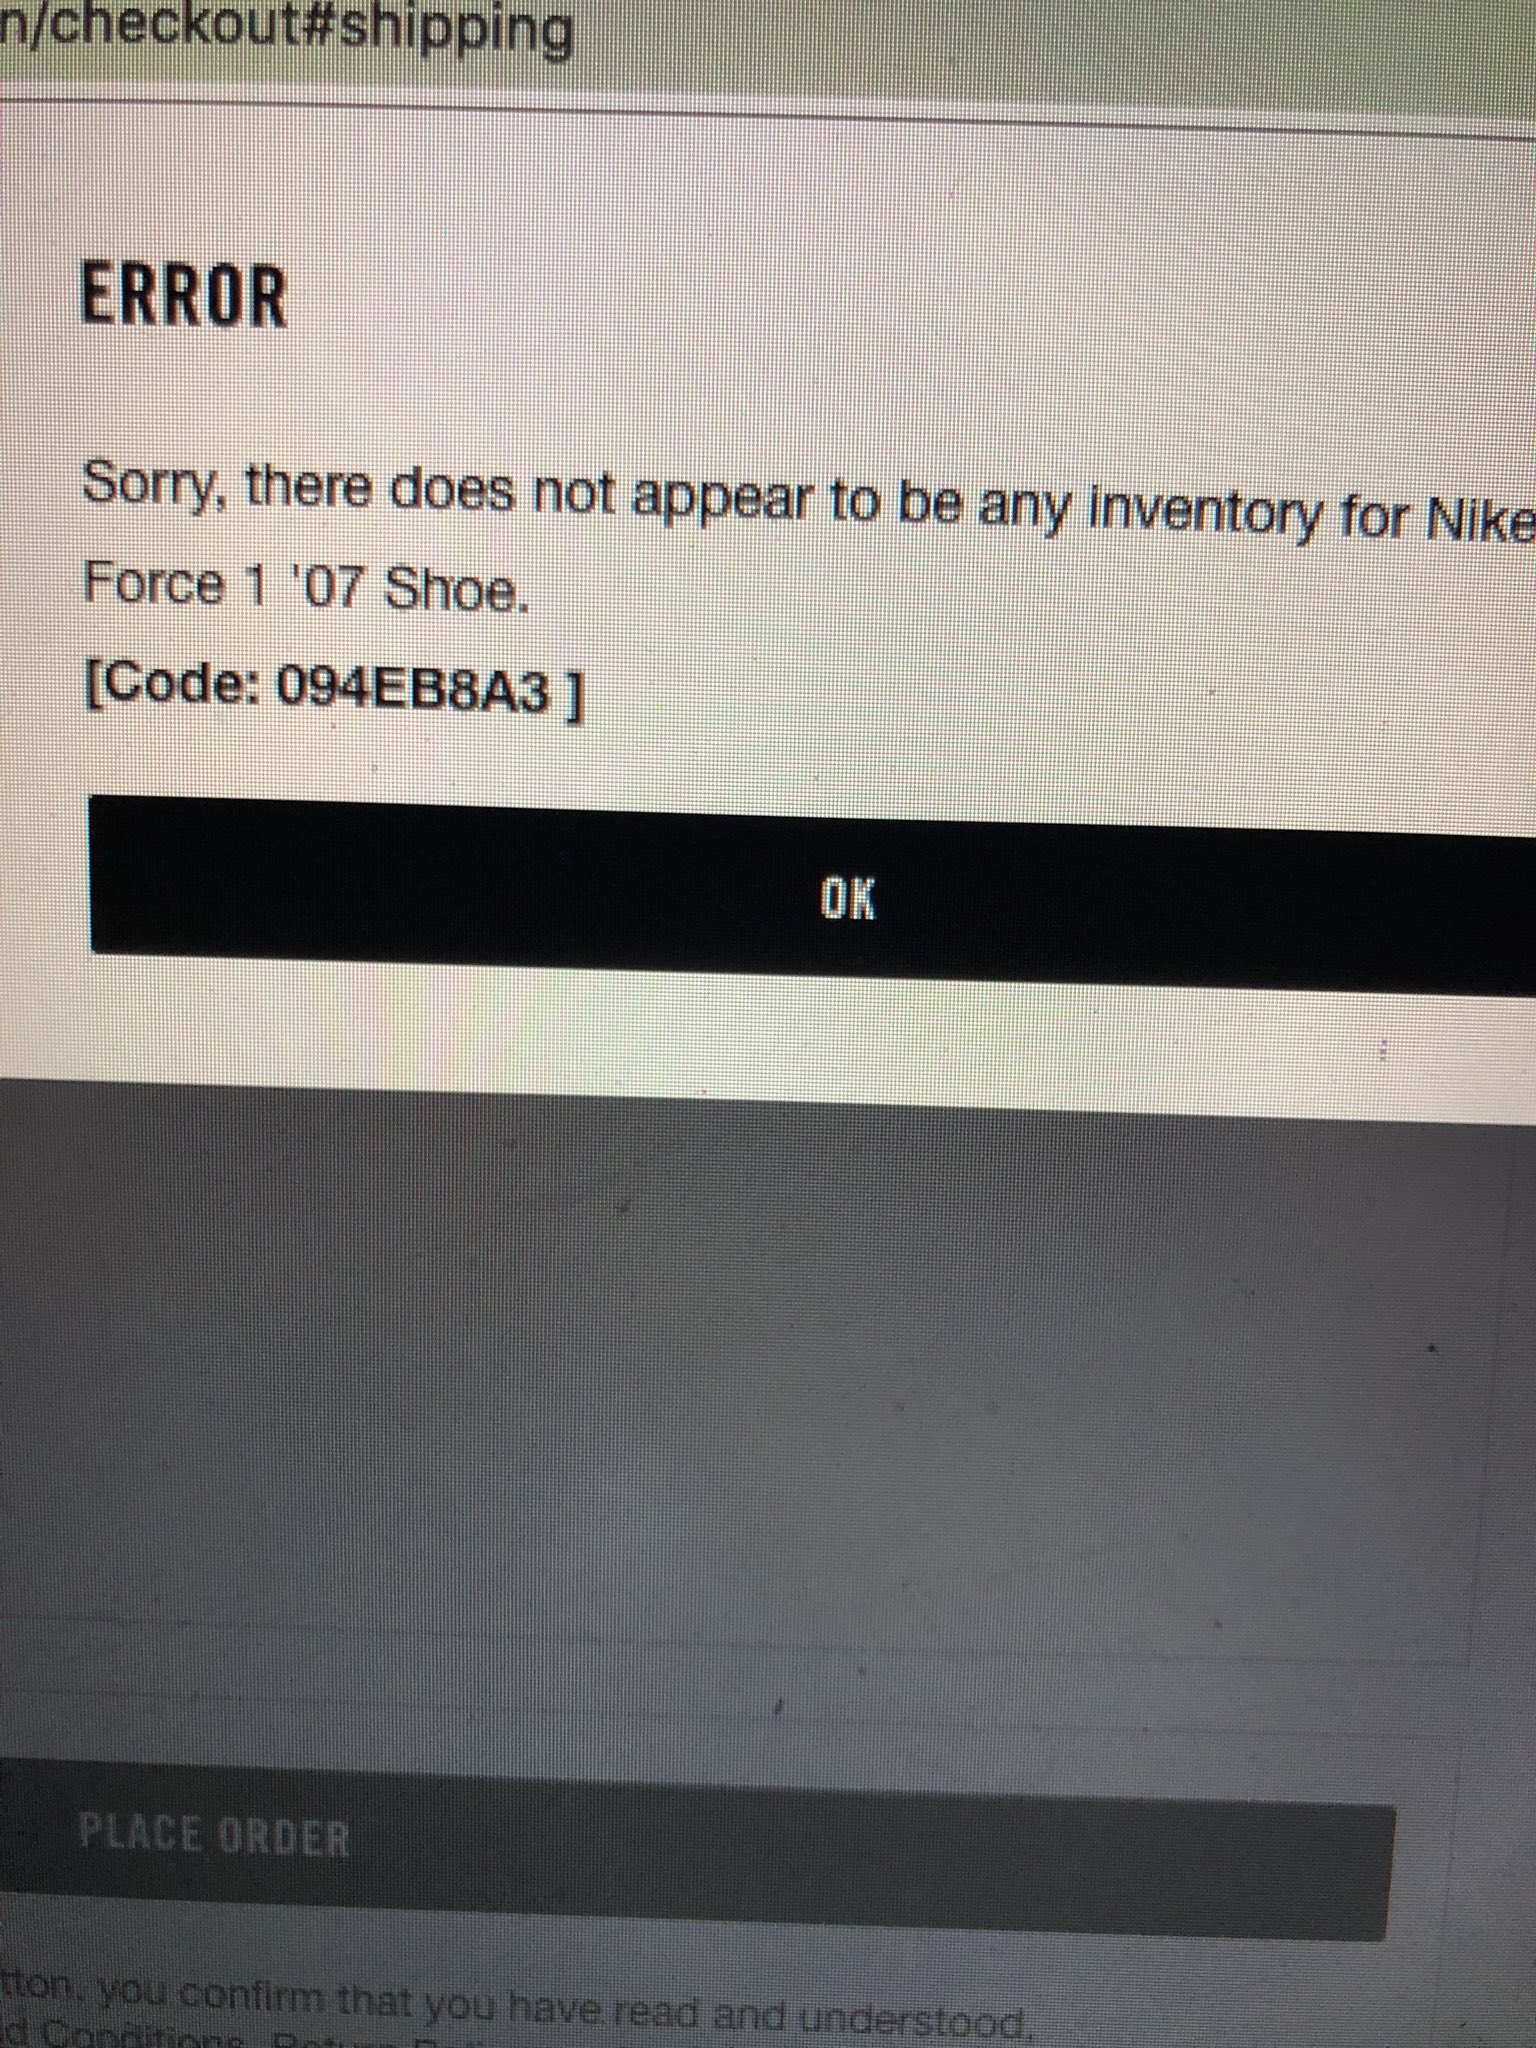 Nike.com sur Twitter : 